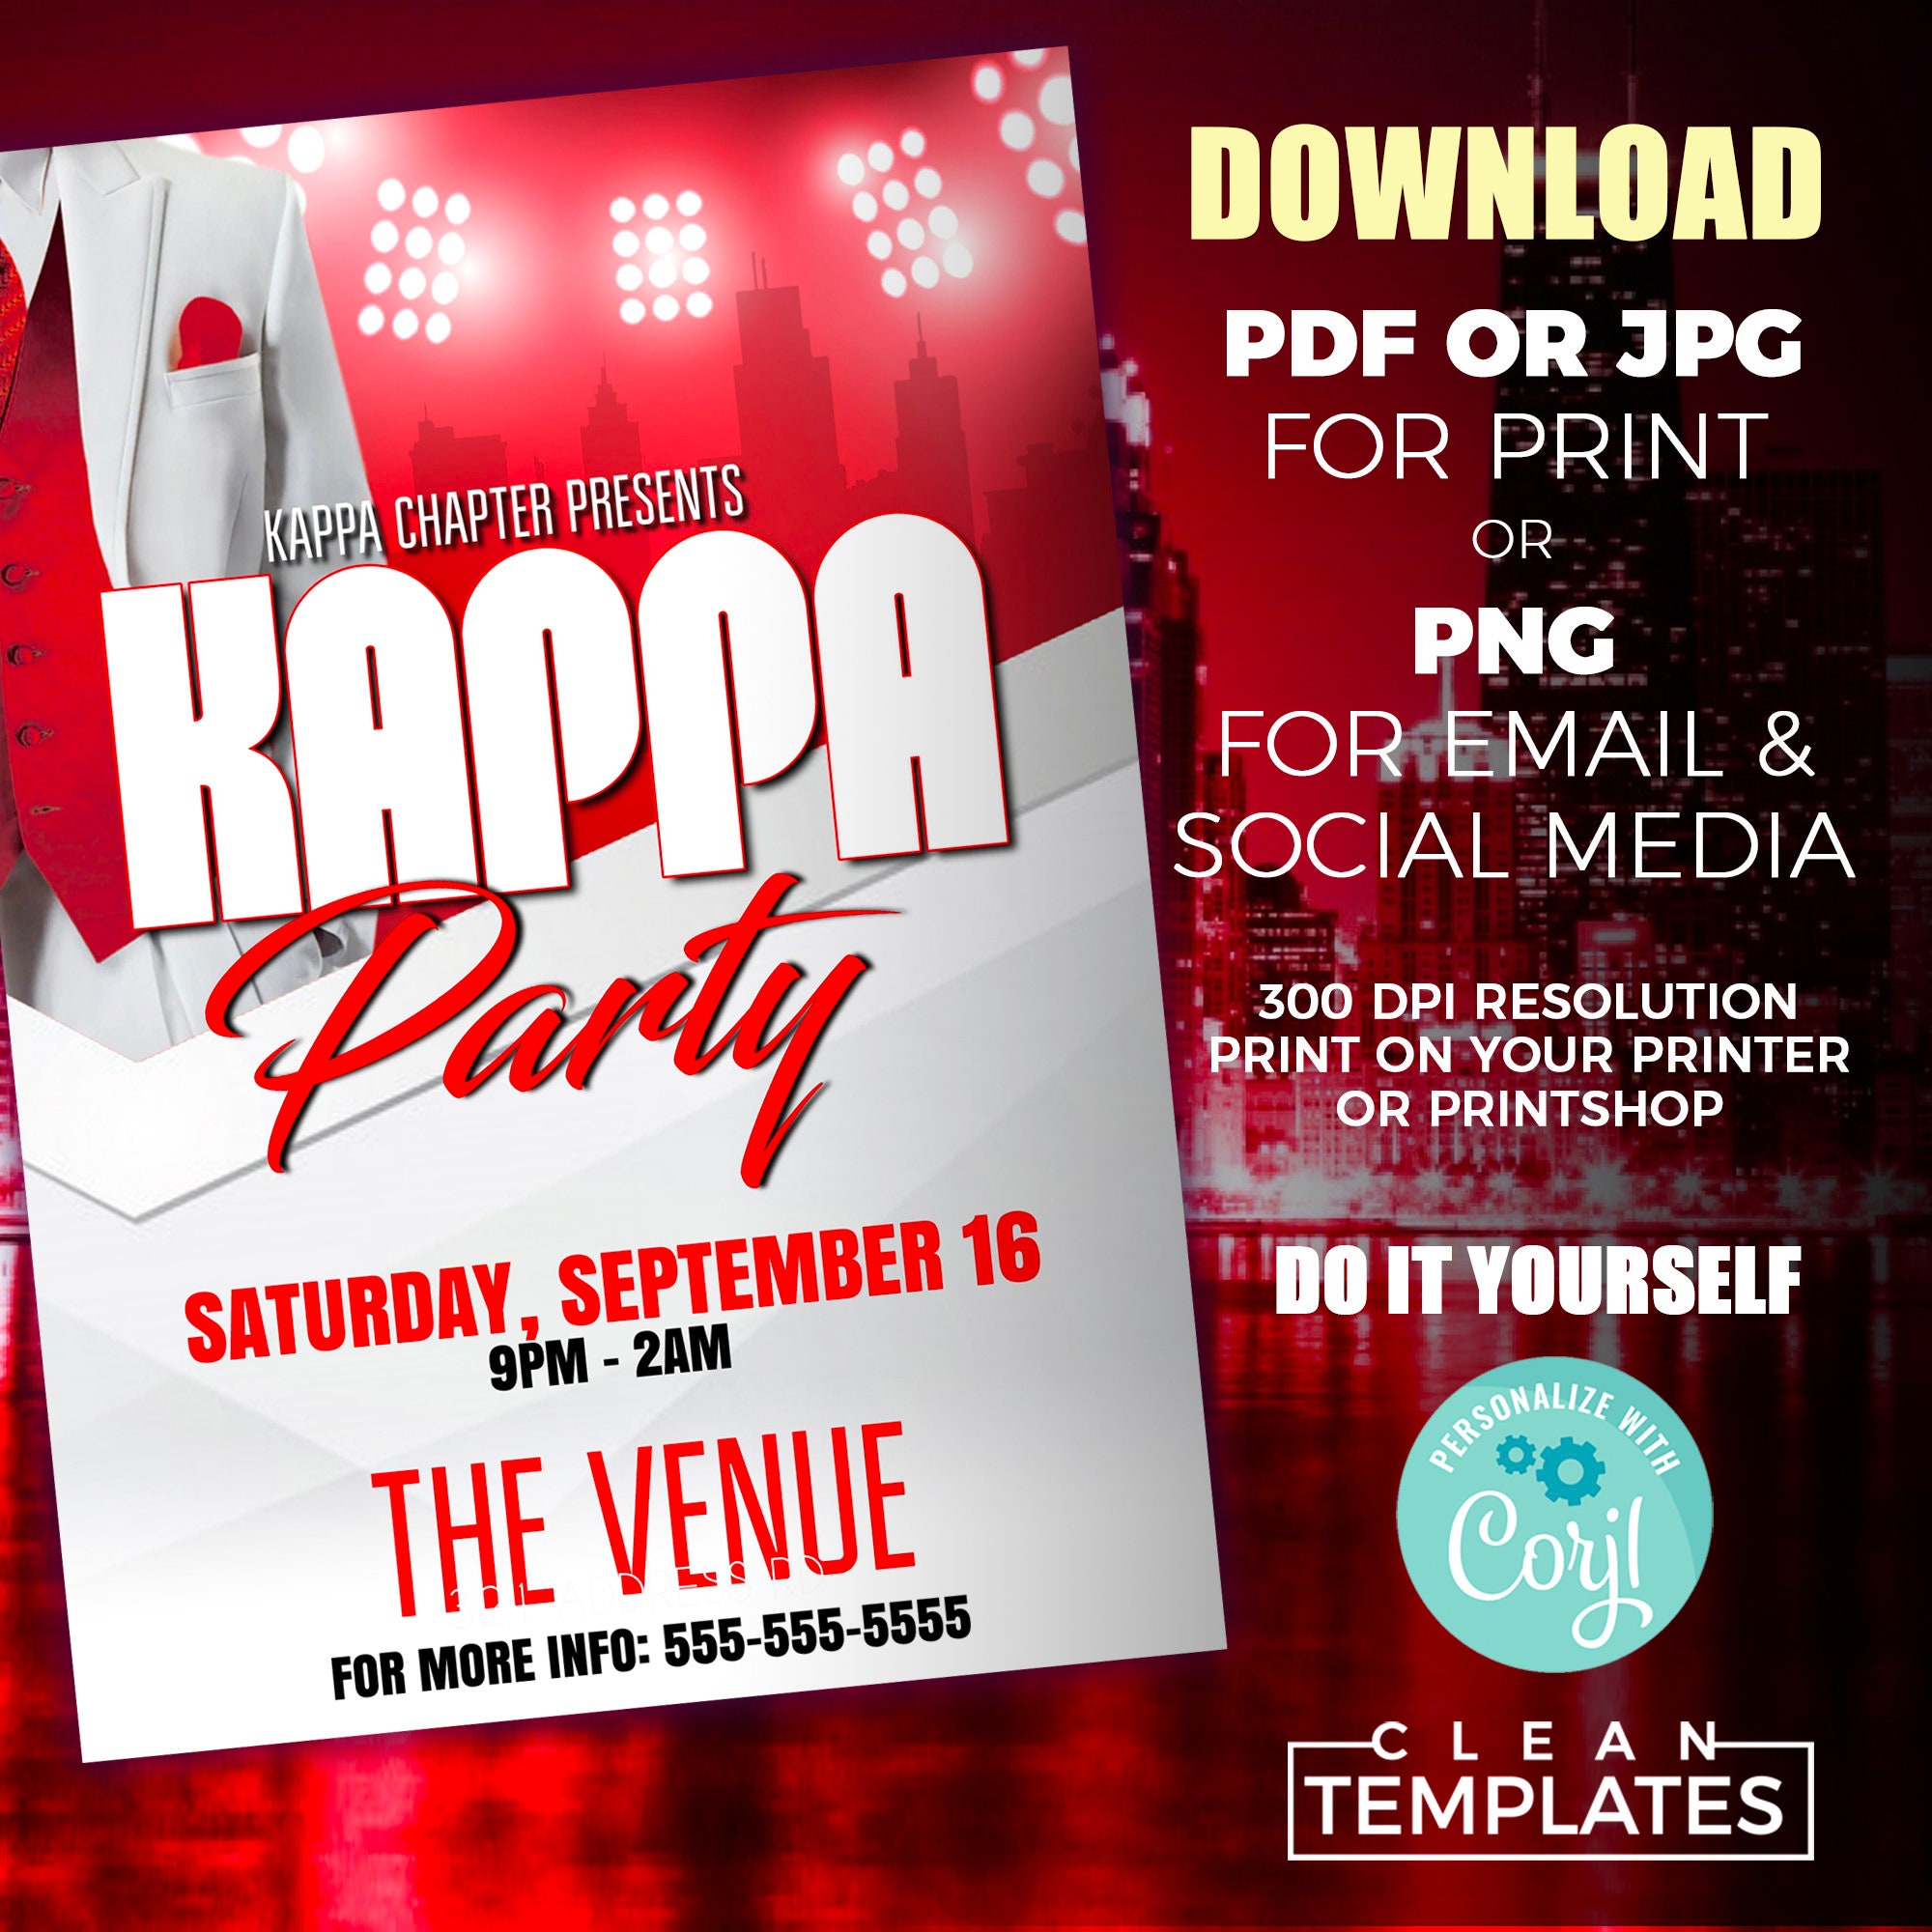 Kappa Party Flyer Template Edit Online 5x7